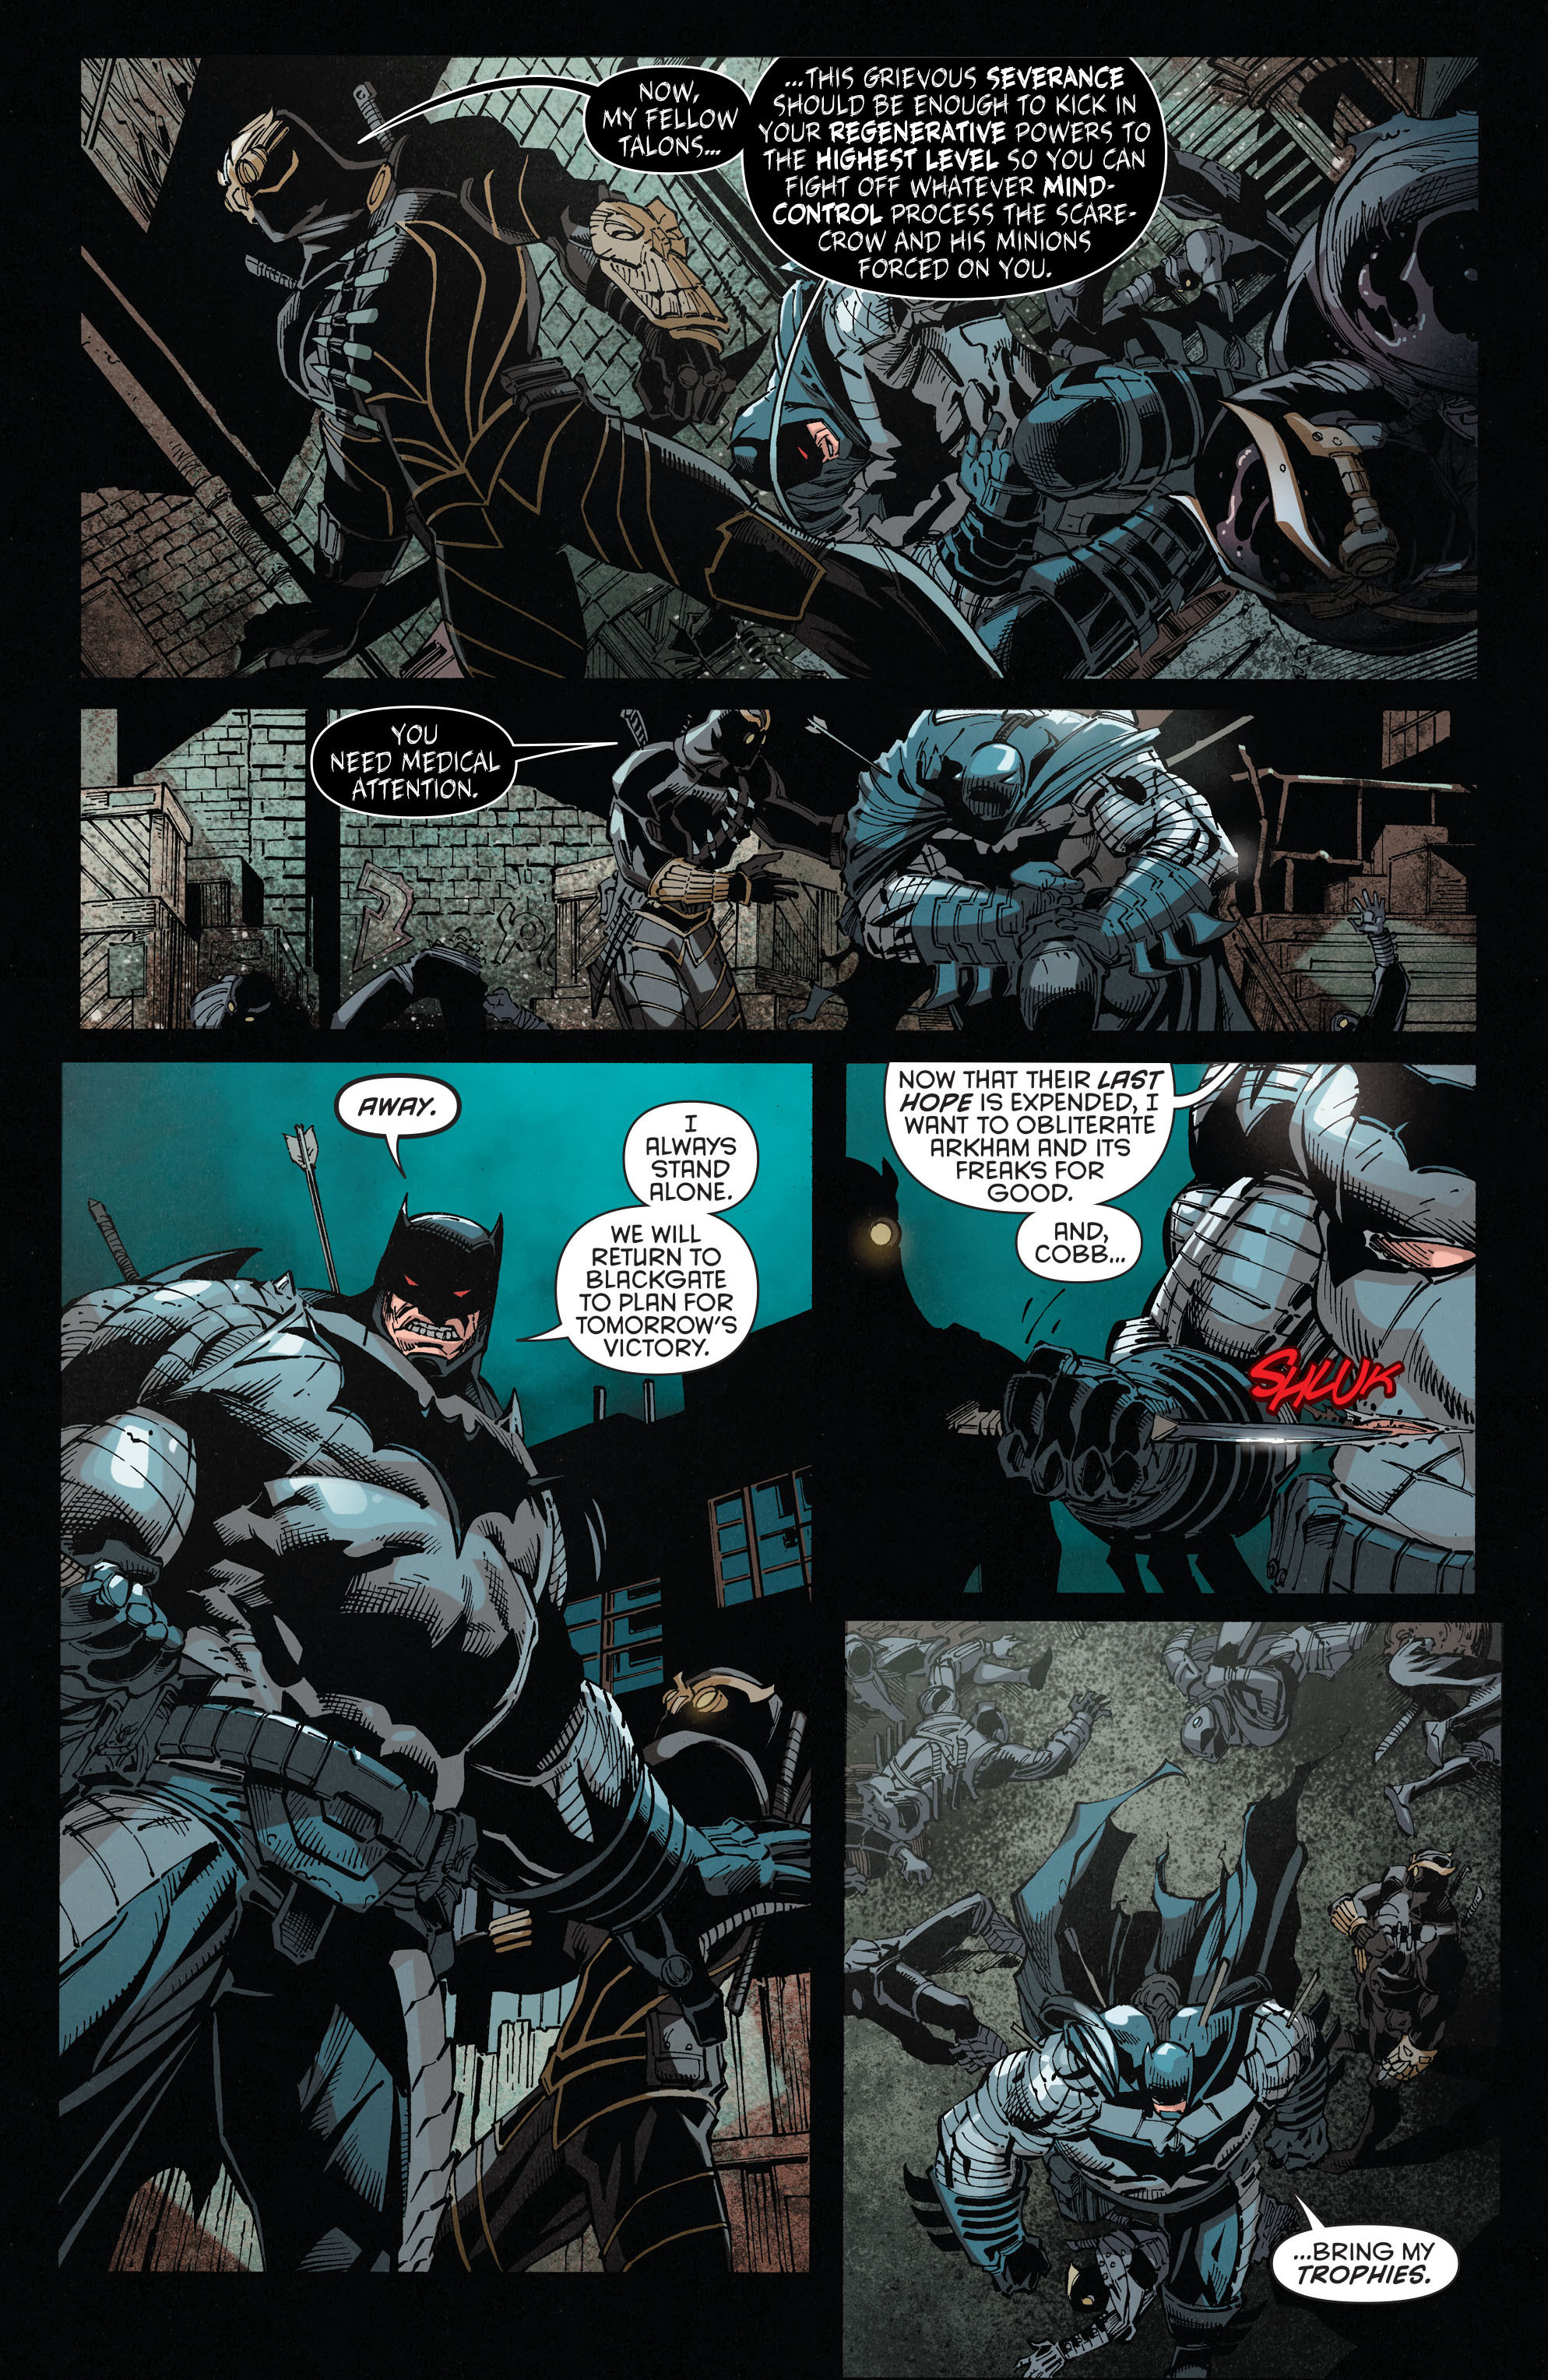 Amazing Forever Evil Aftermath: Batman Vs. Bane Pictures & Backgrounds